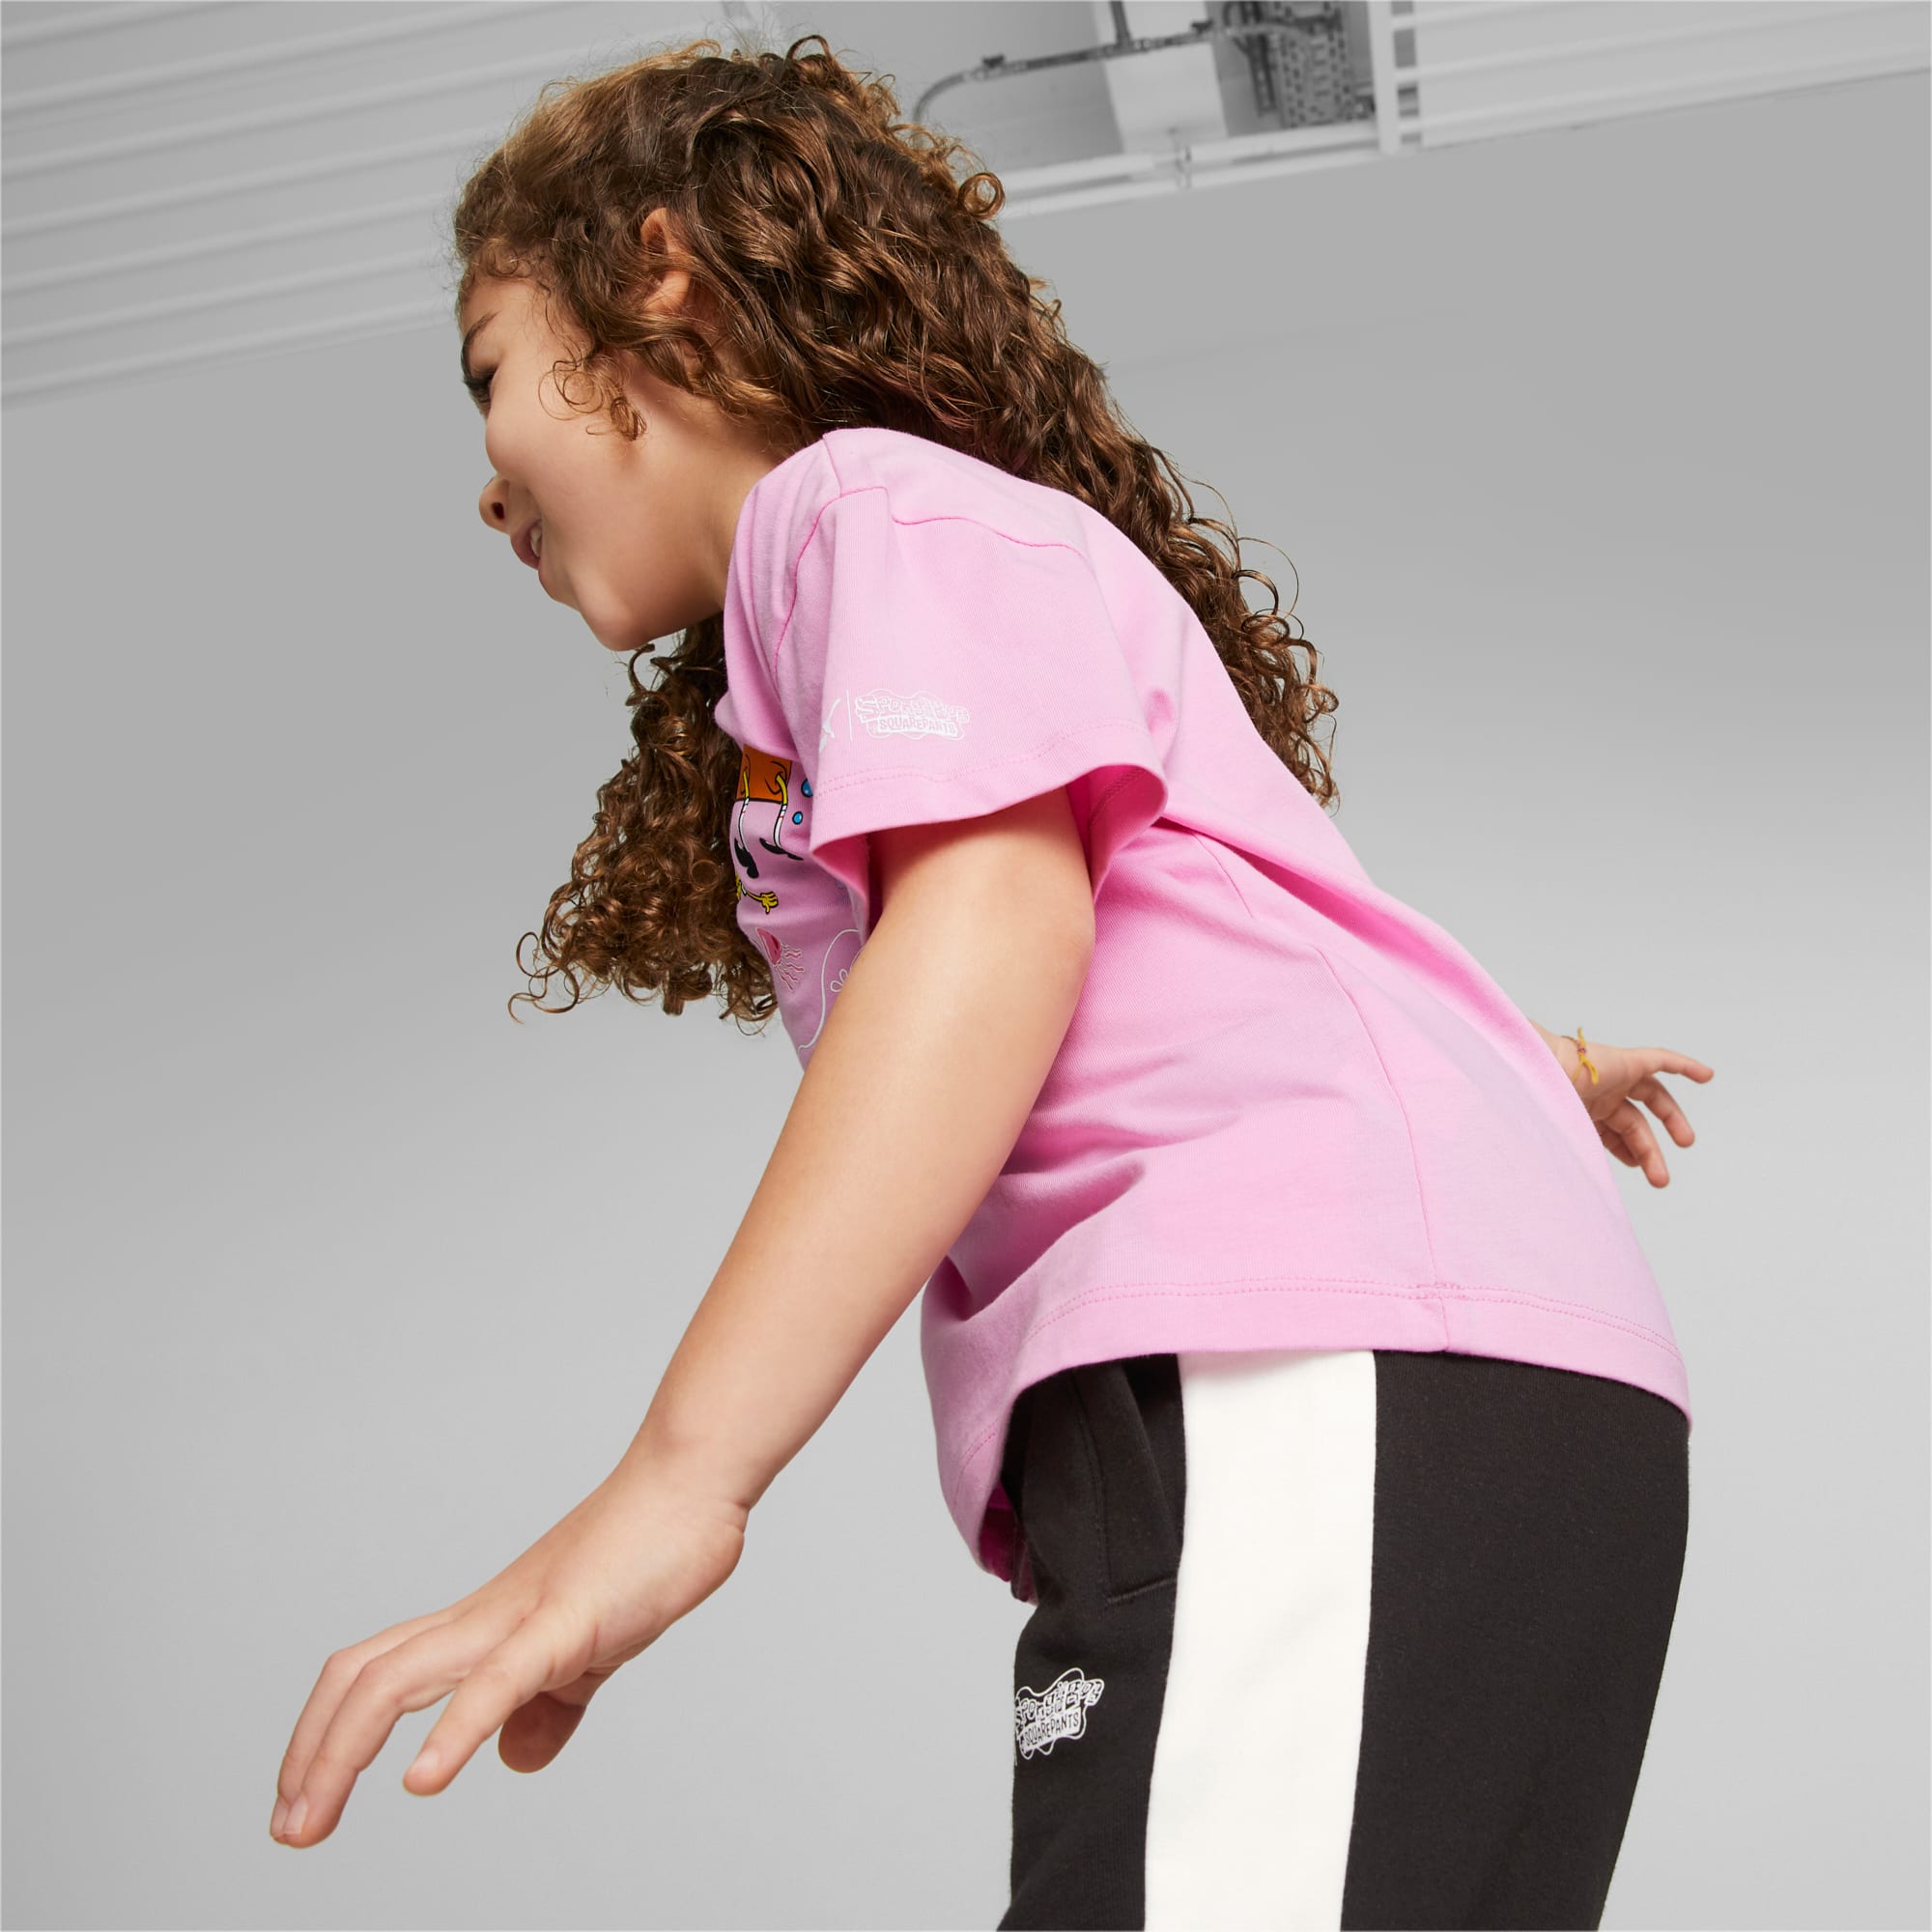 PUMA X SPONGEBOB T-Shirt Kinder, Rosa, Größe: 128, Kleidung